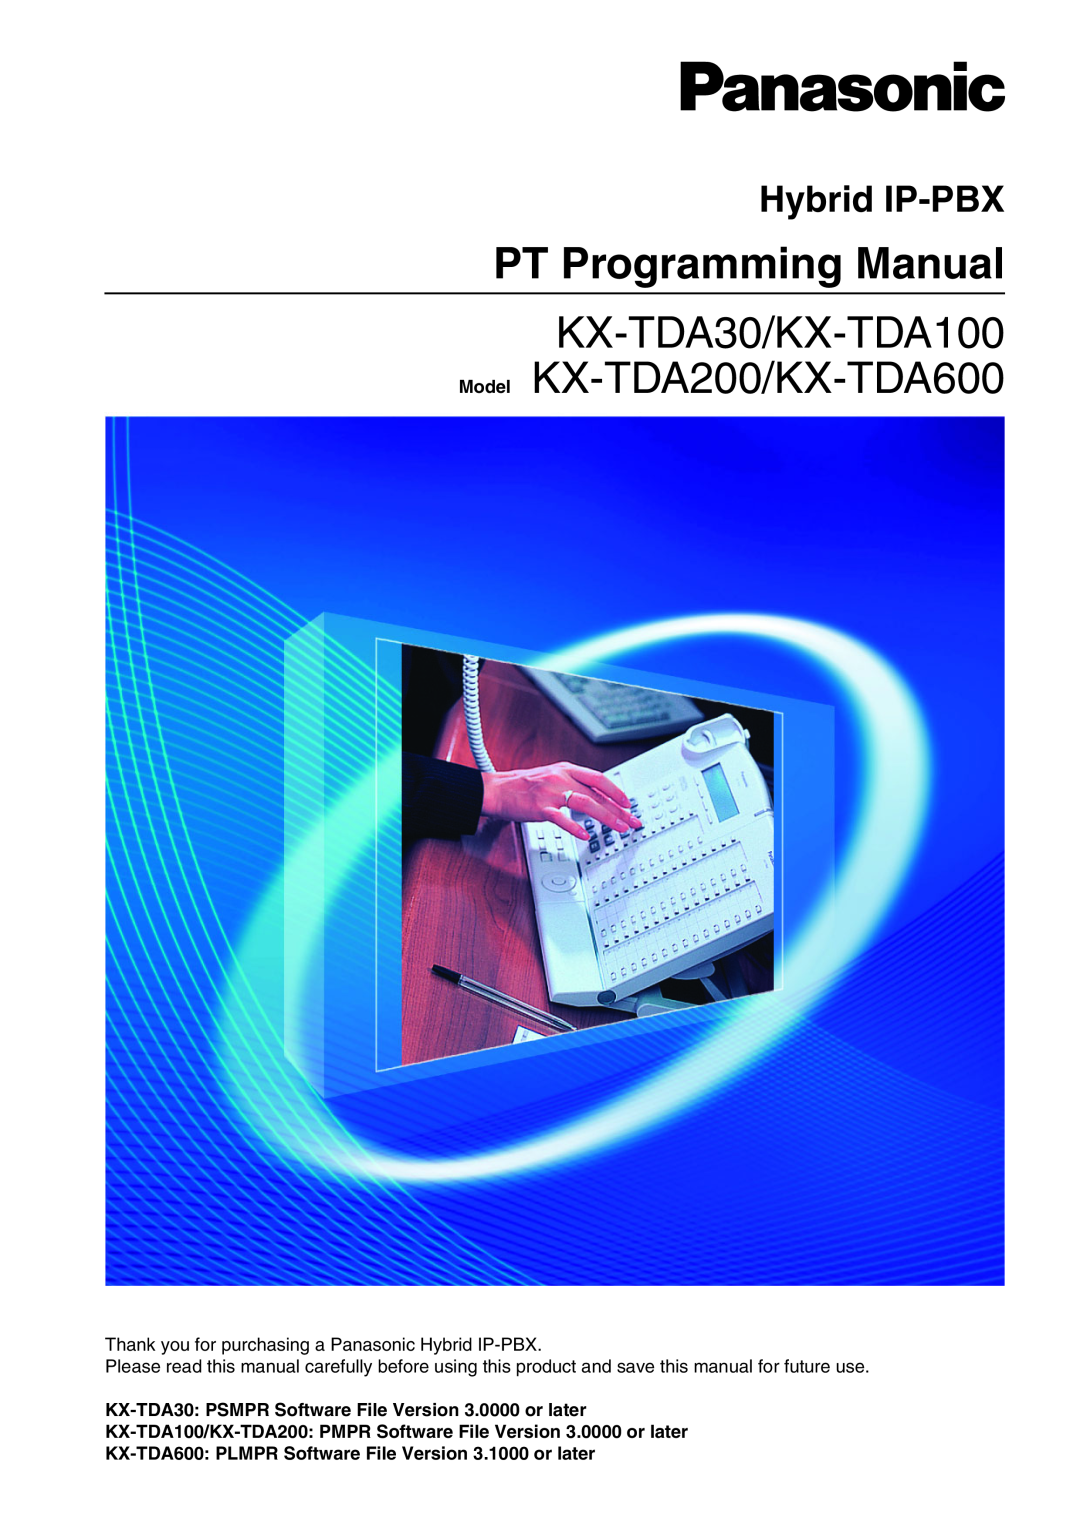 Panasonic user manual Hybrid IP PBX, KX-TDA100 Model No. KX-TDA200 